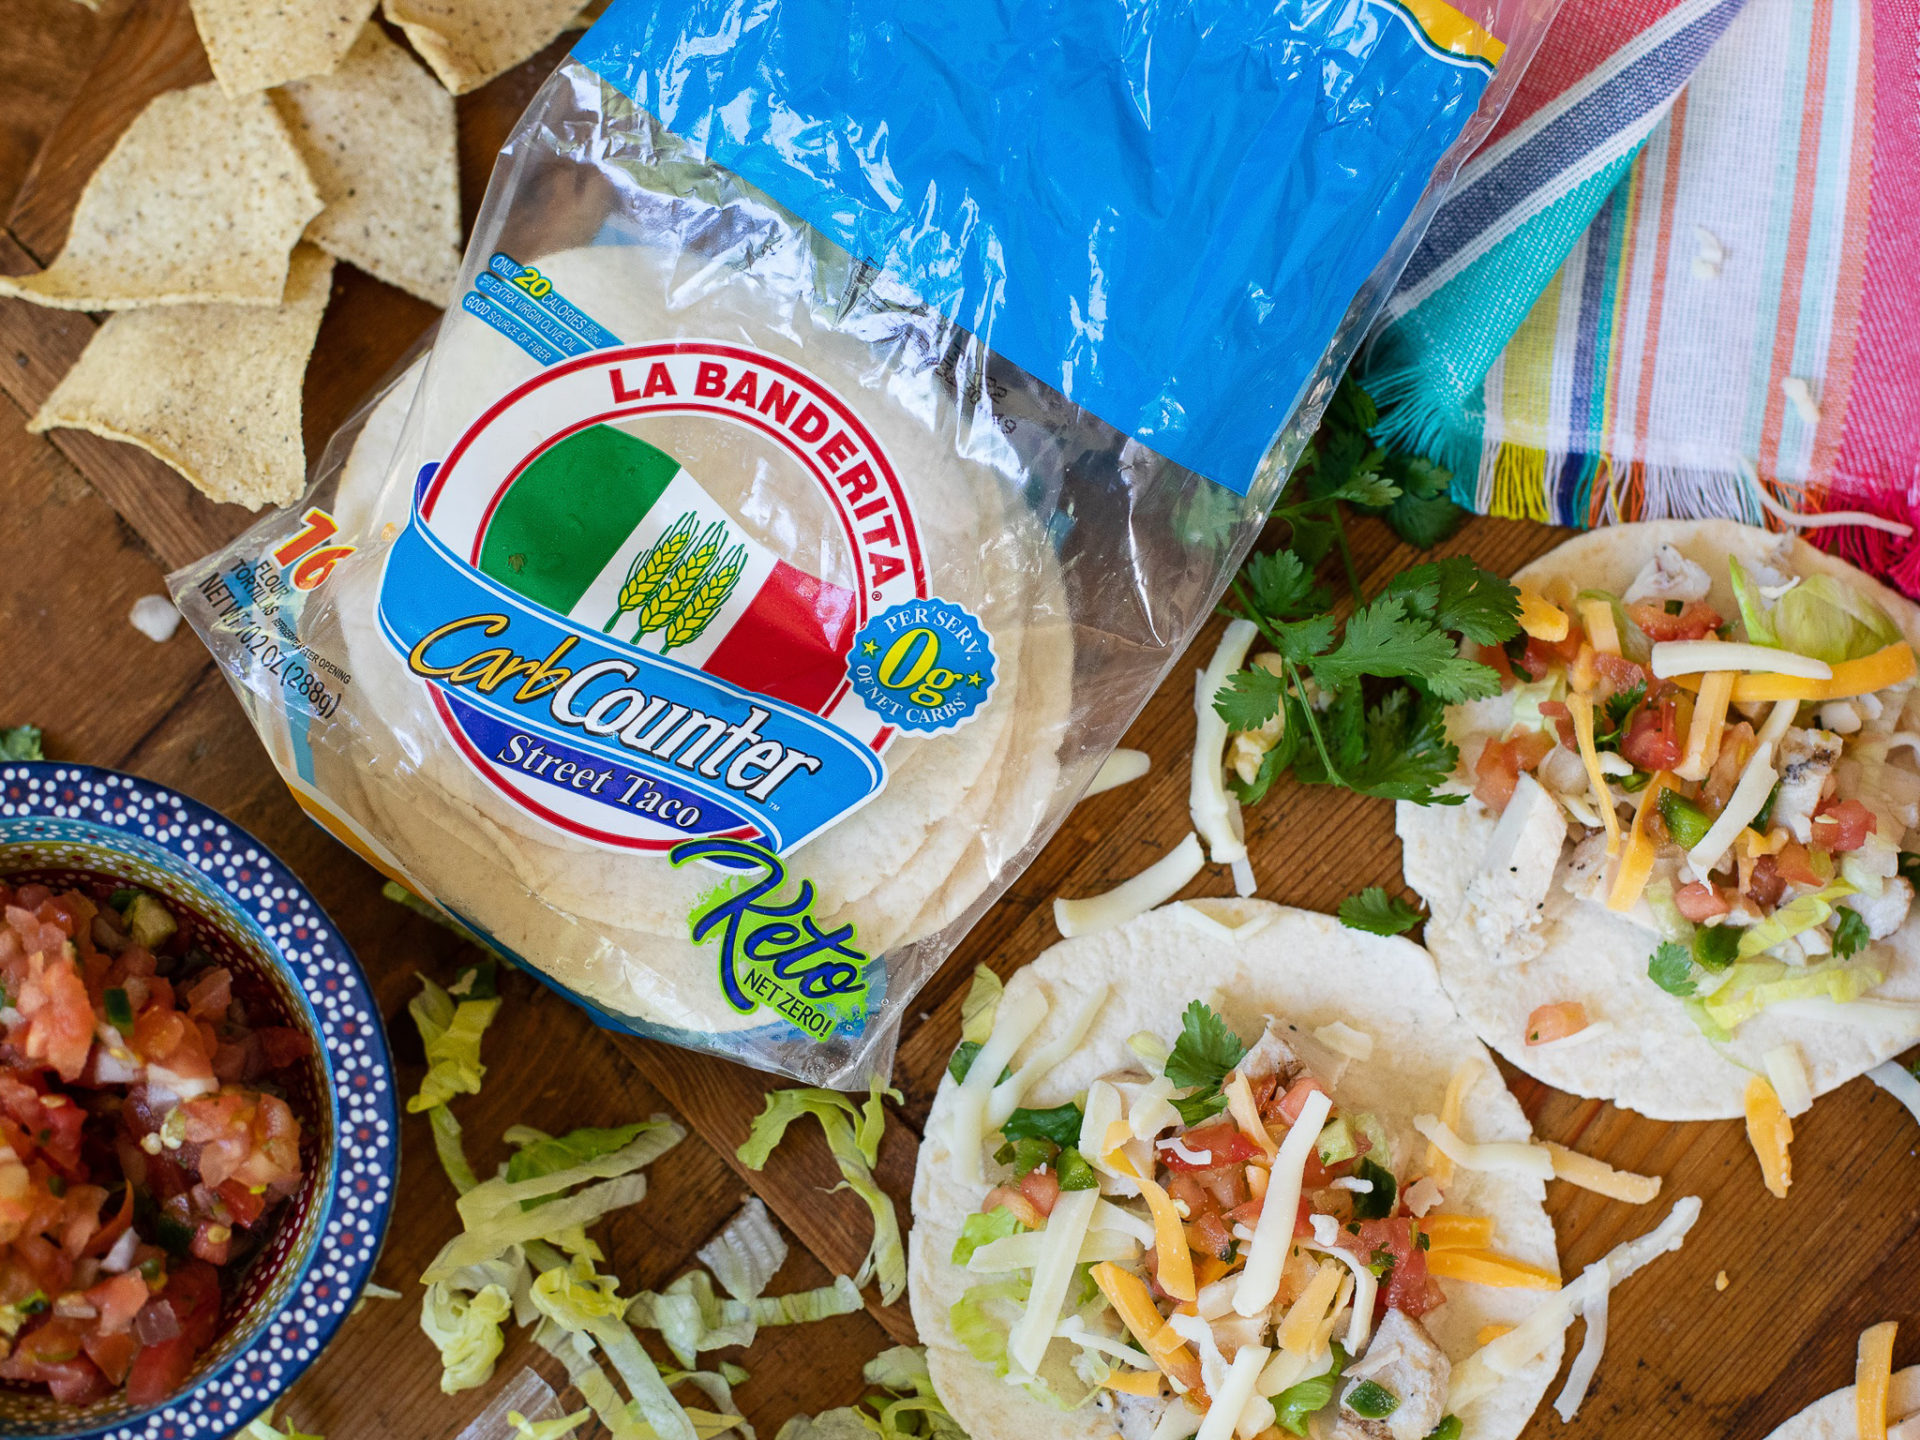 Get La Banderita Carb Counter or Corn Street Taco Slider Tortillas For Just $1.49 At Kroger